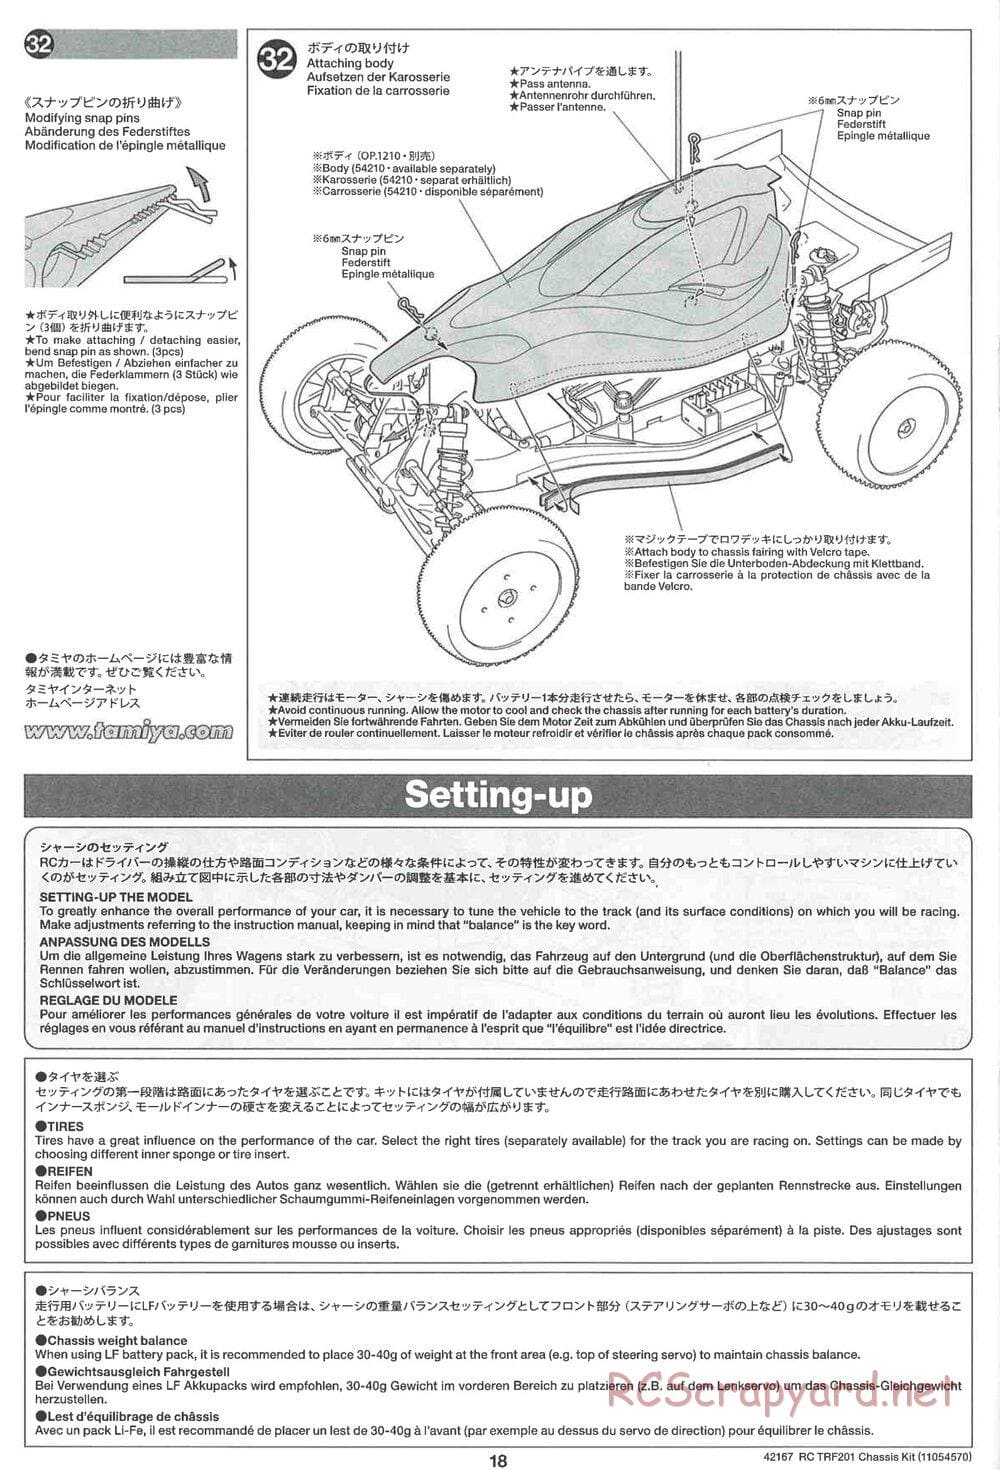 Tamiya - TRF201 Chassis - Manual - Page 18